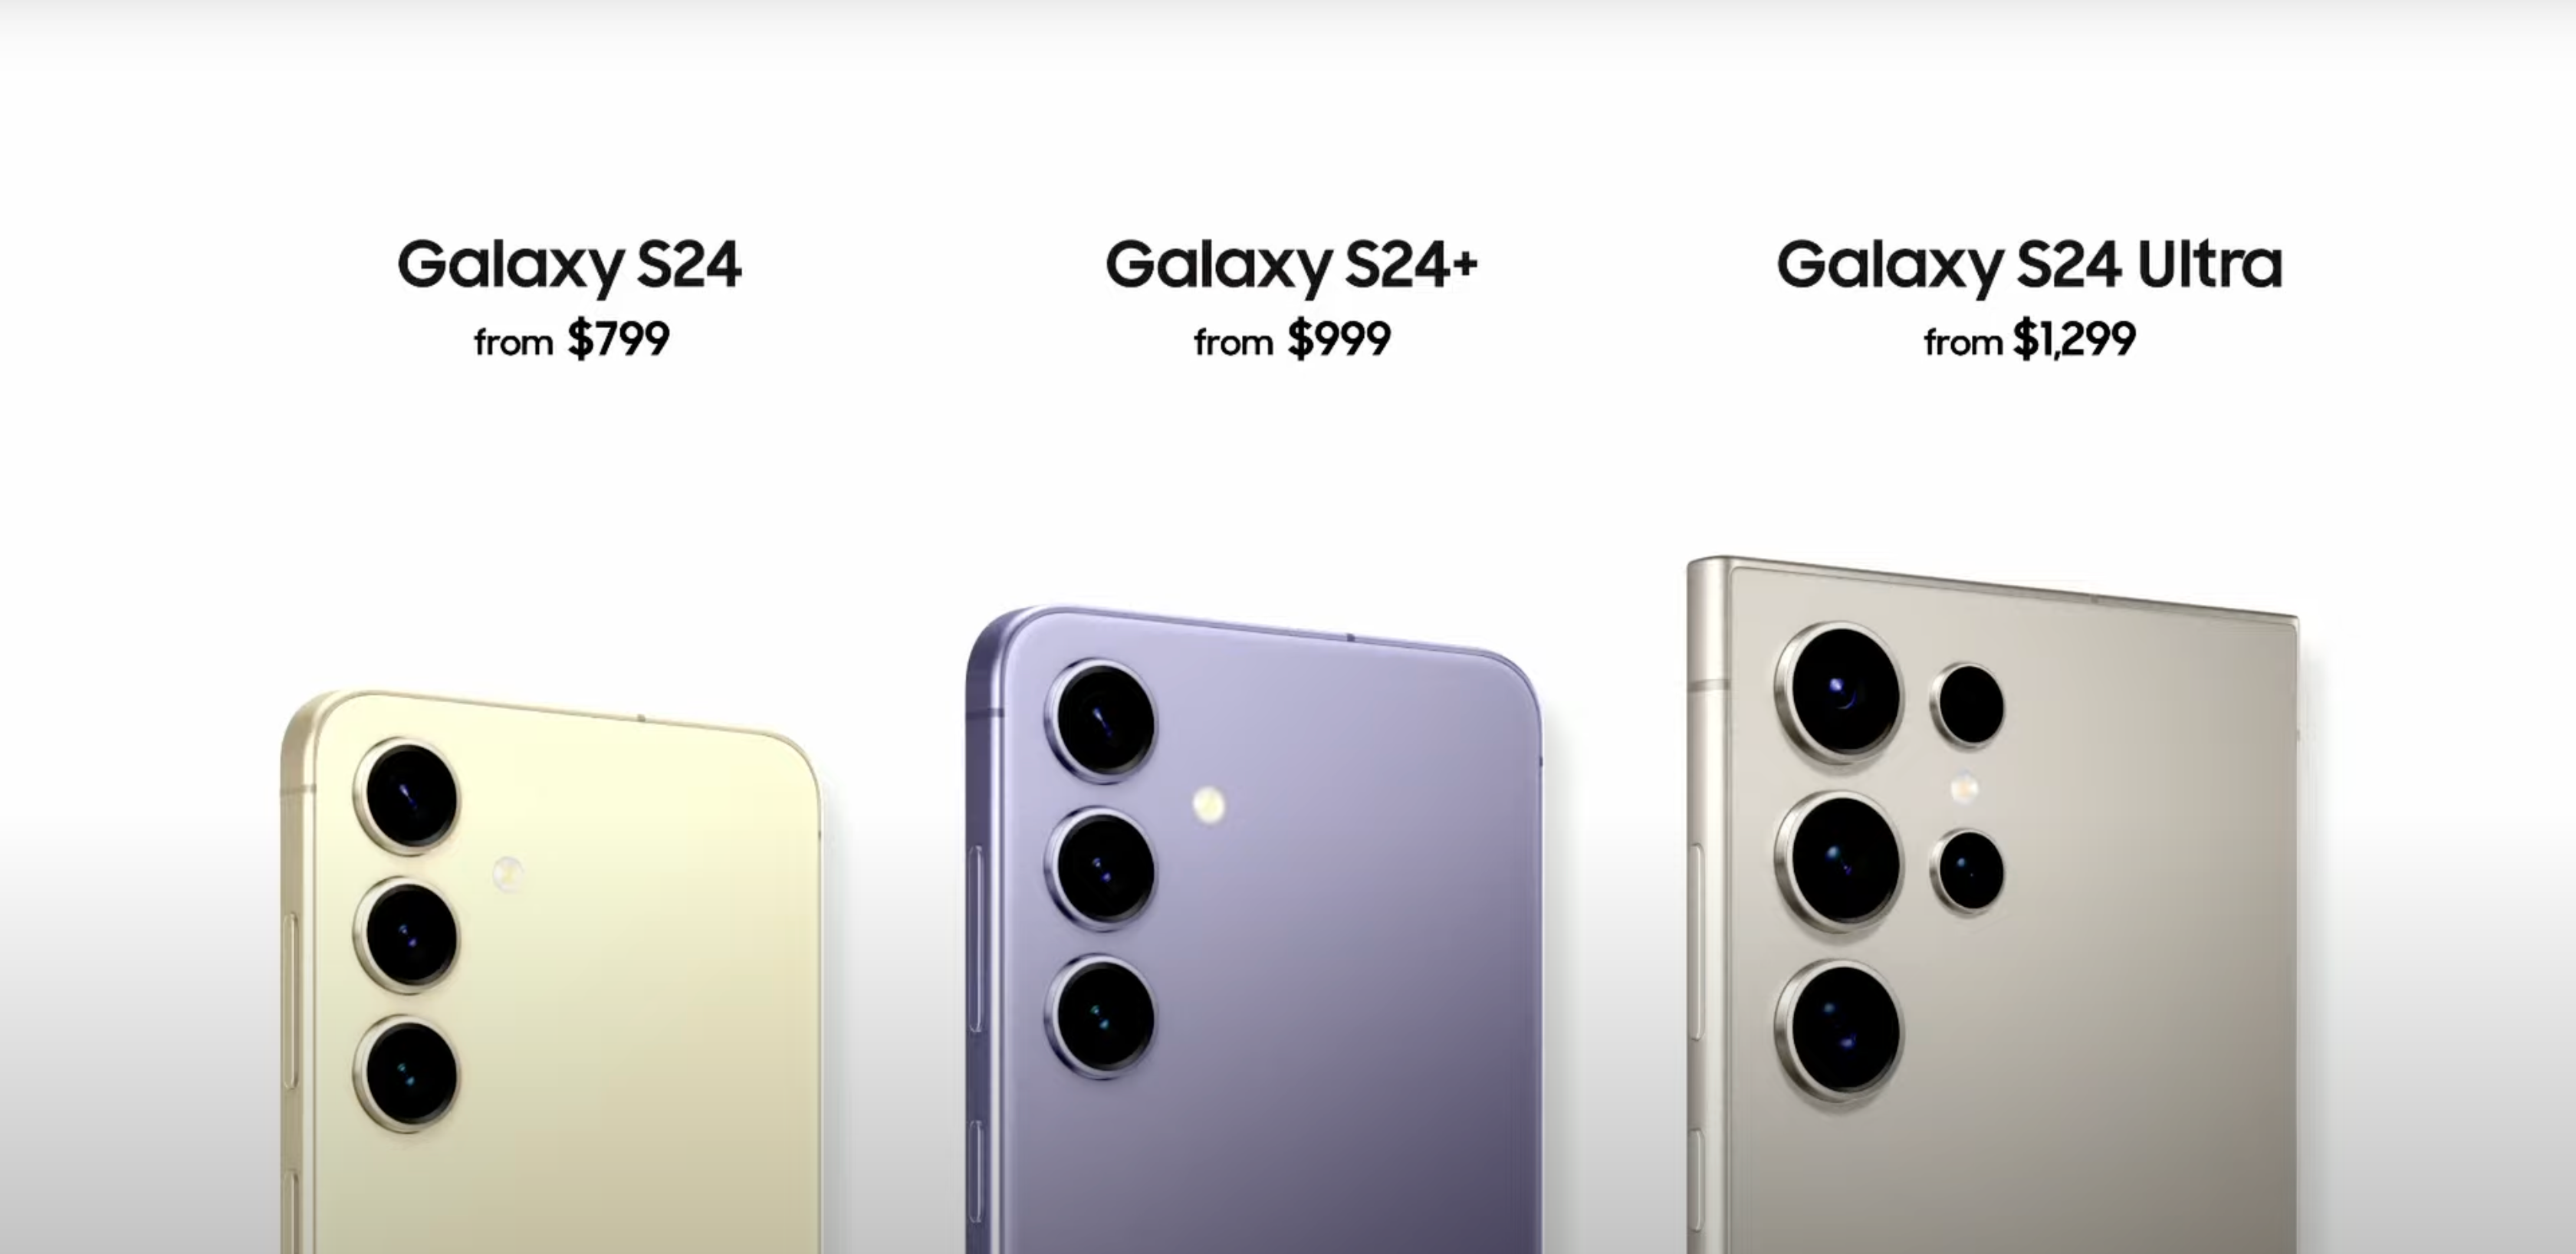 Samsung Galaxy S24 Lineup Pricing